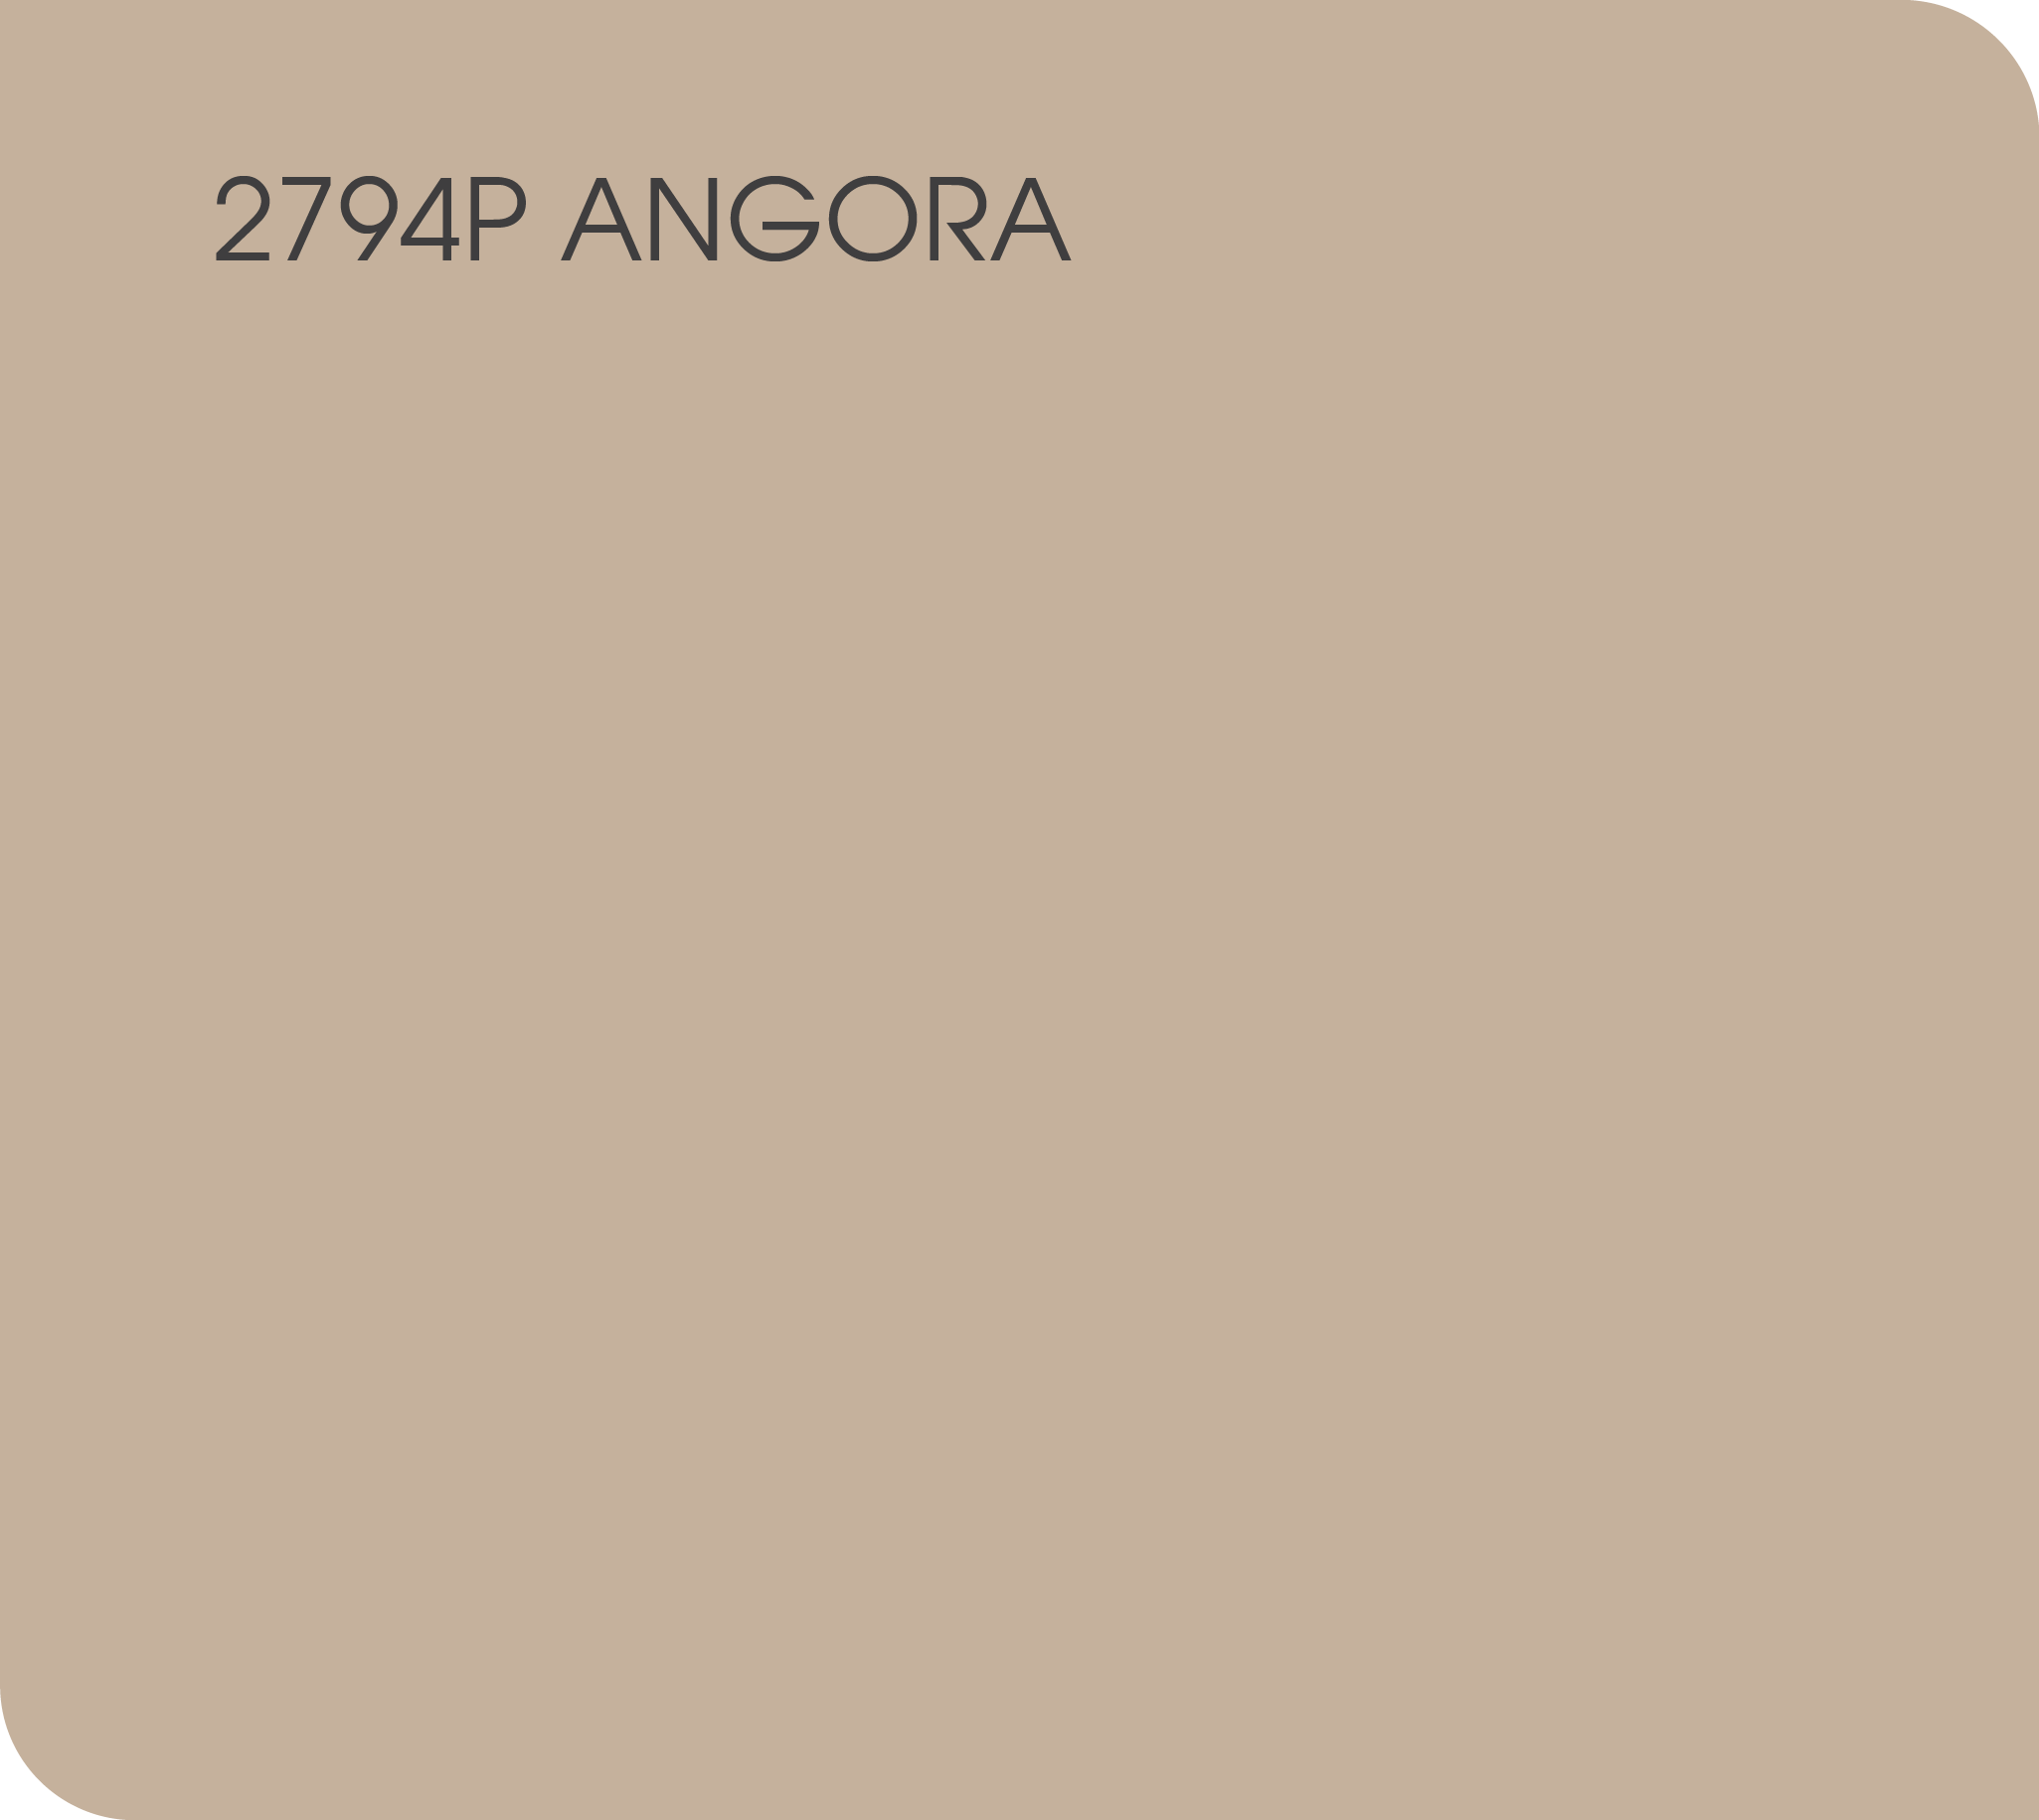 angora